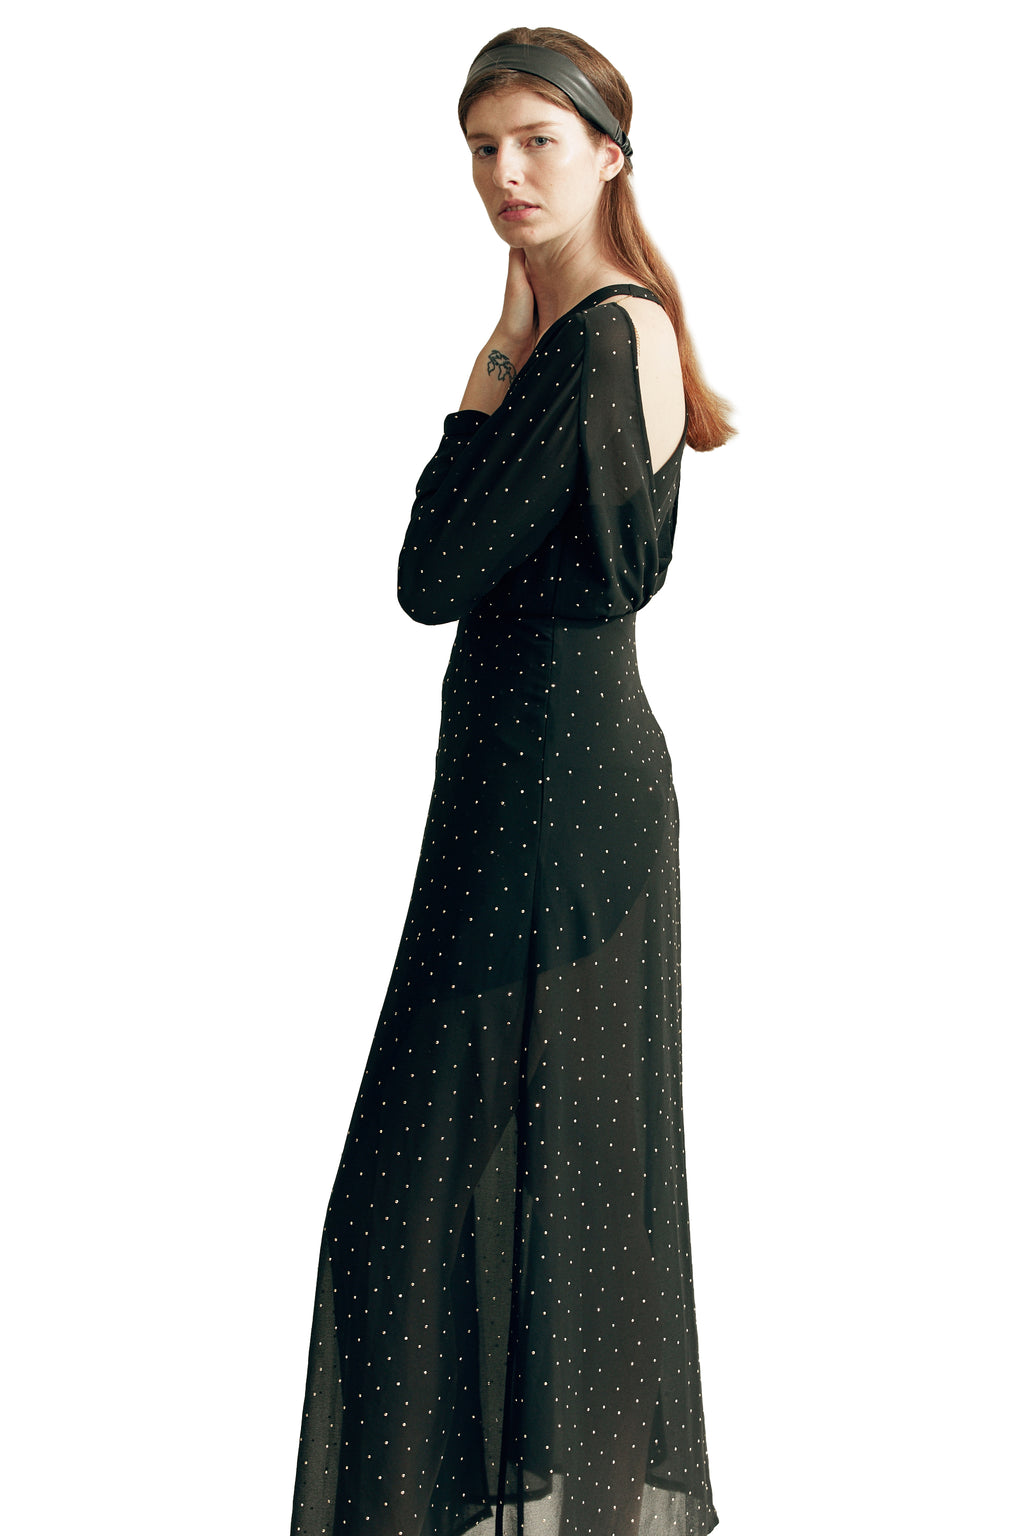 Black Sequined Chiffon Dress